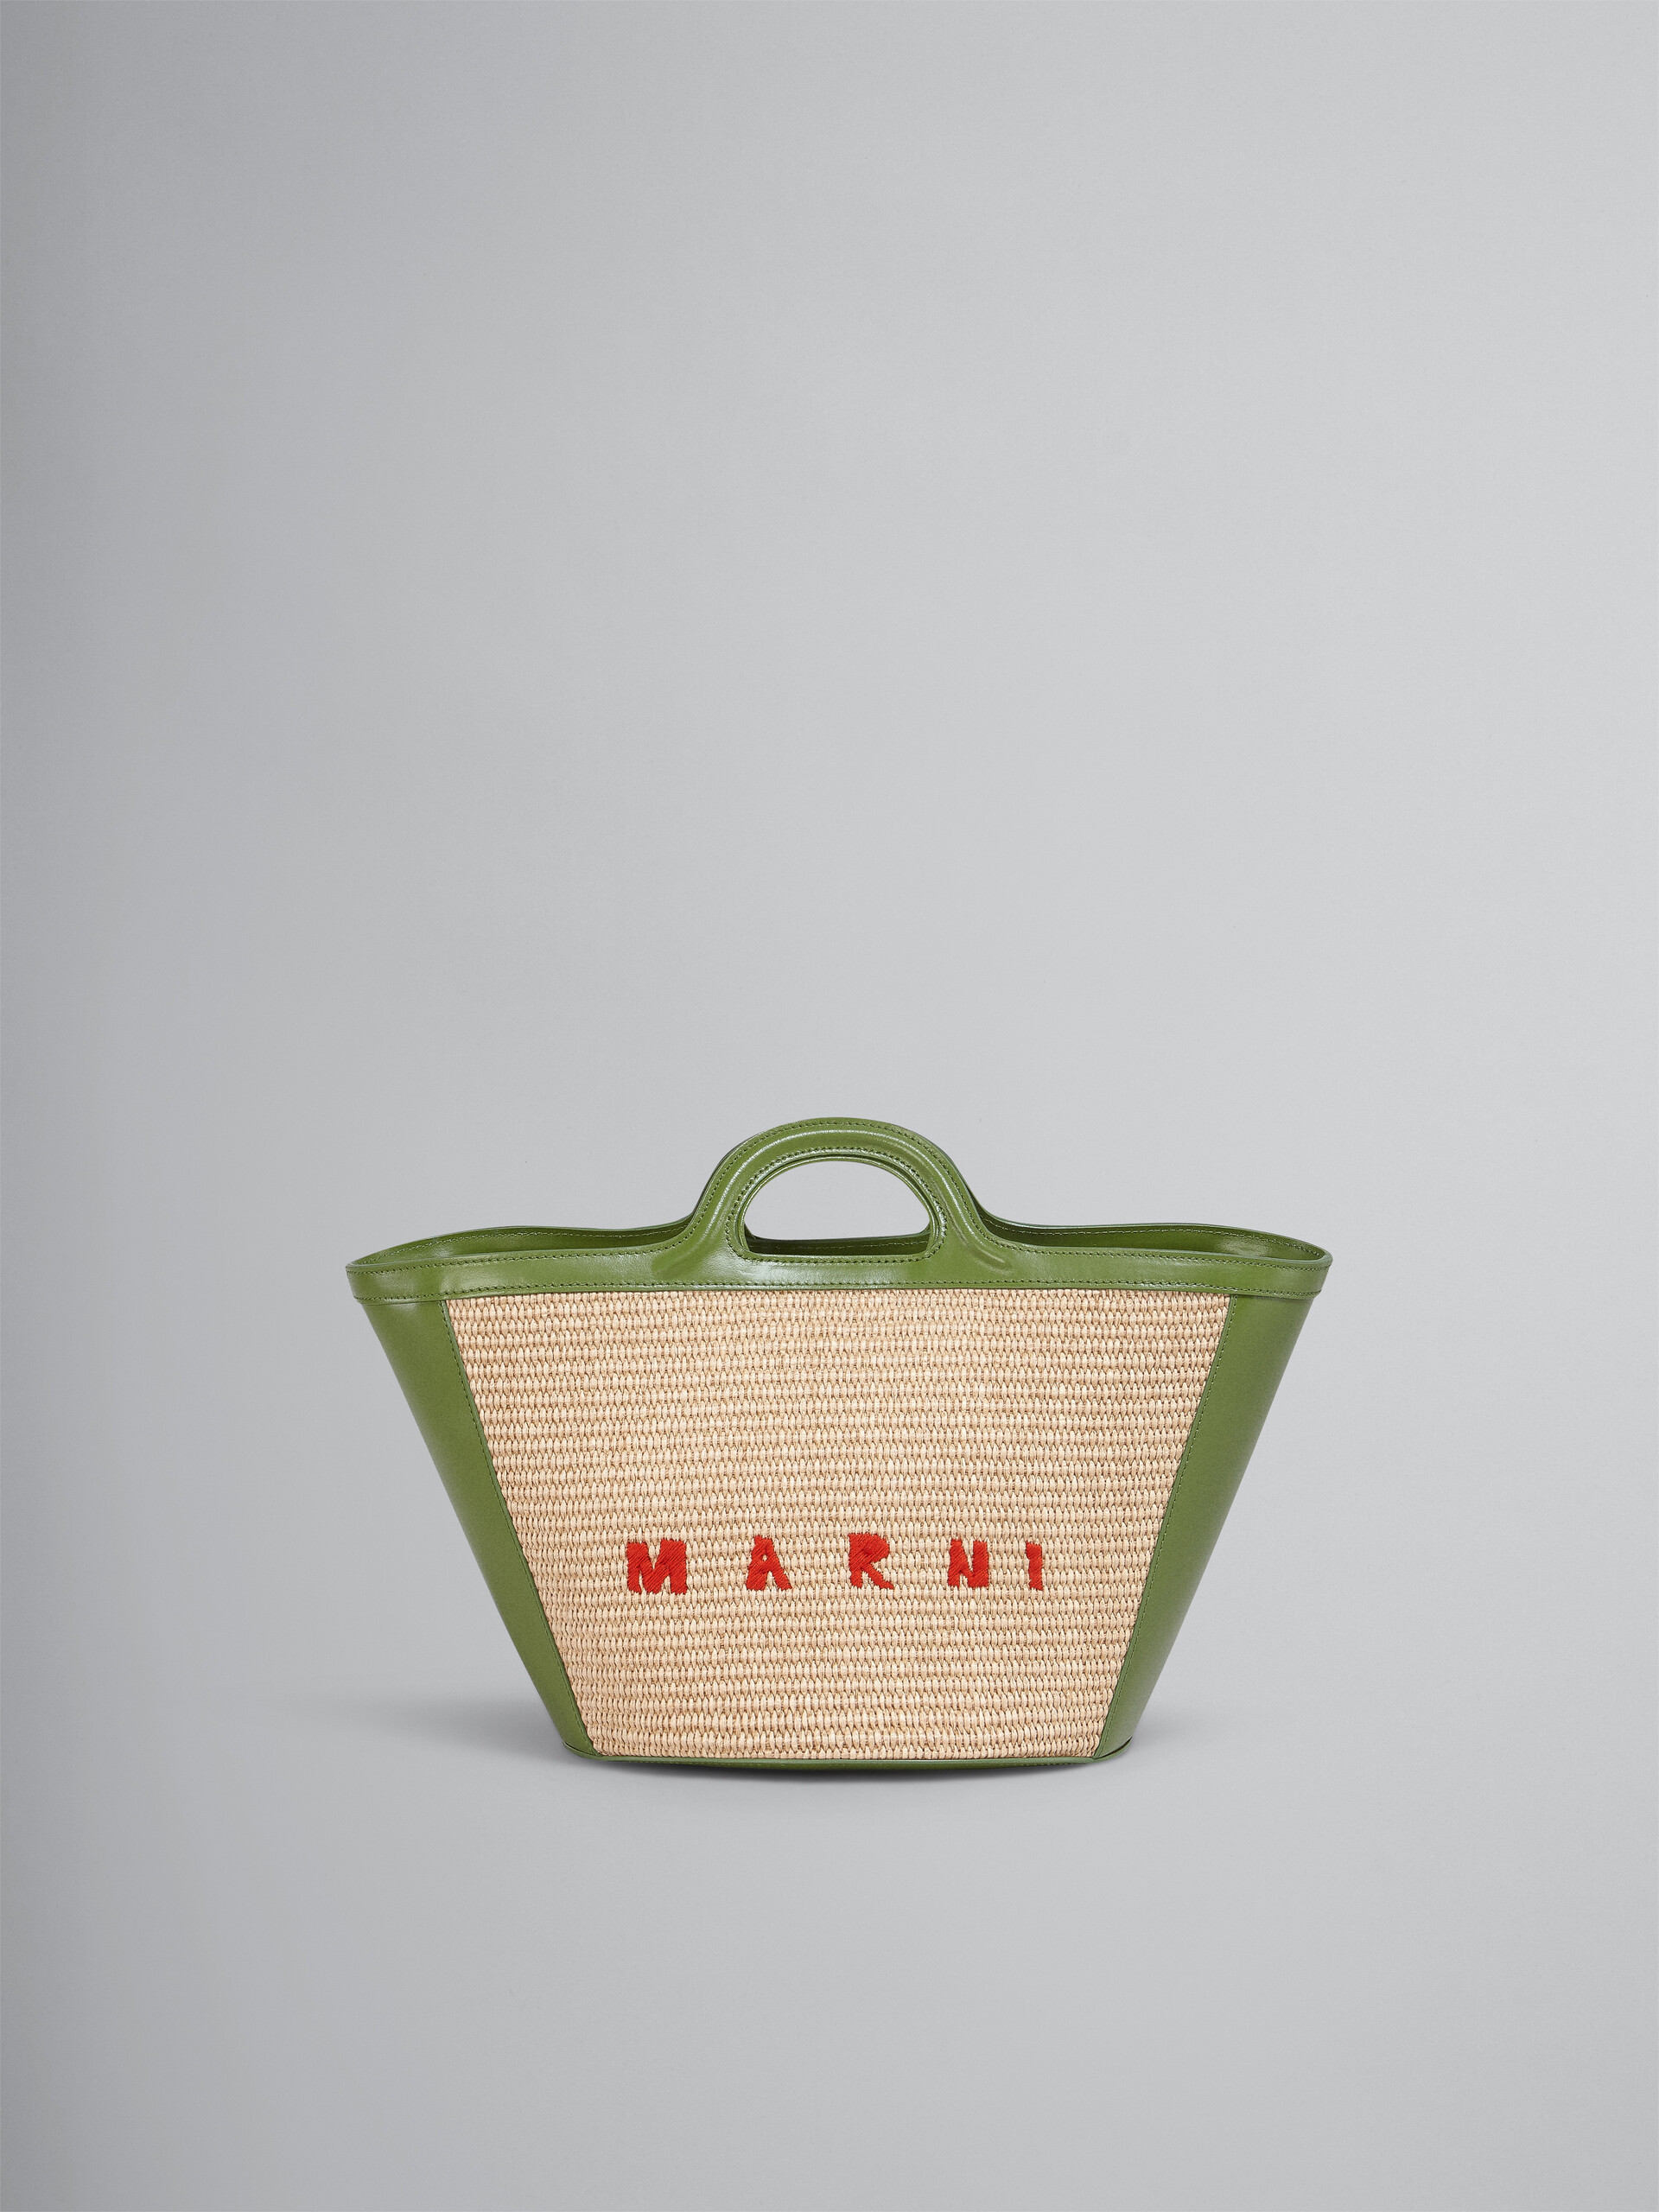 TROPICALIA small bag in green leather and raffia - Handbag - Image 1